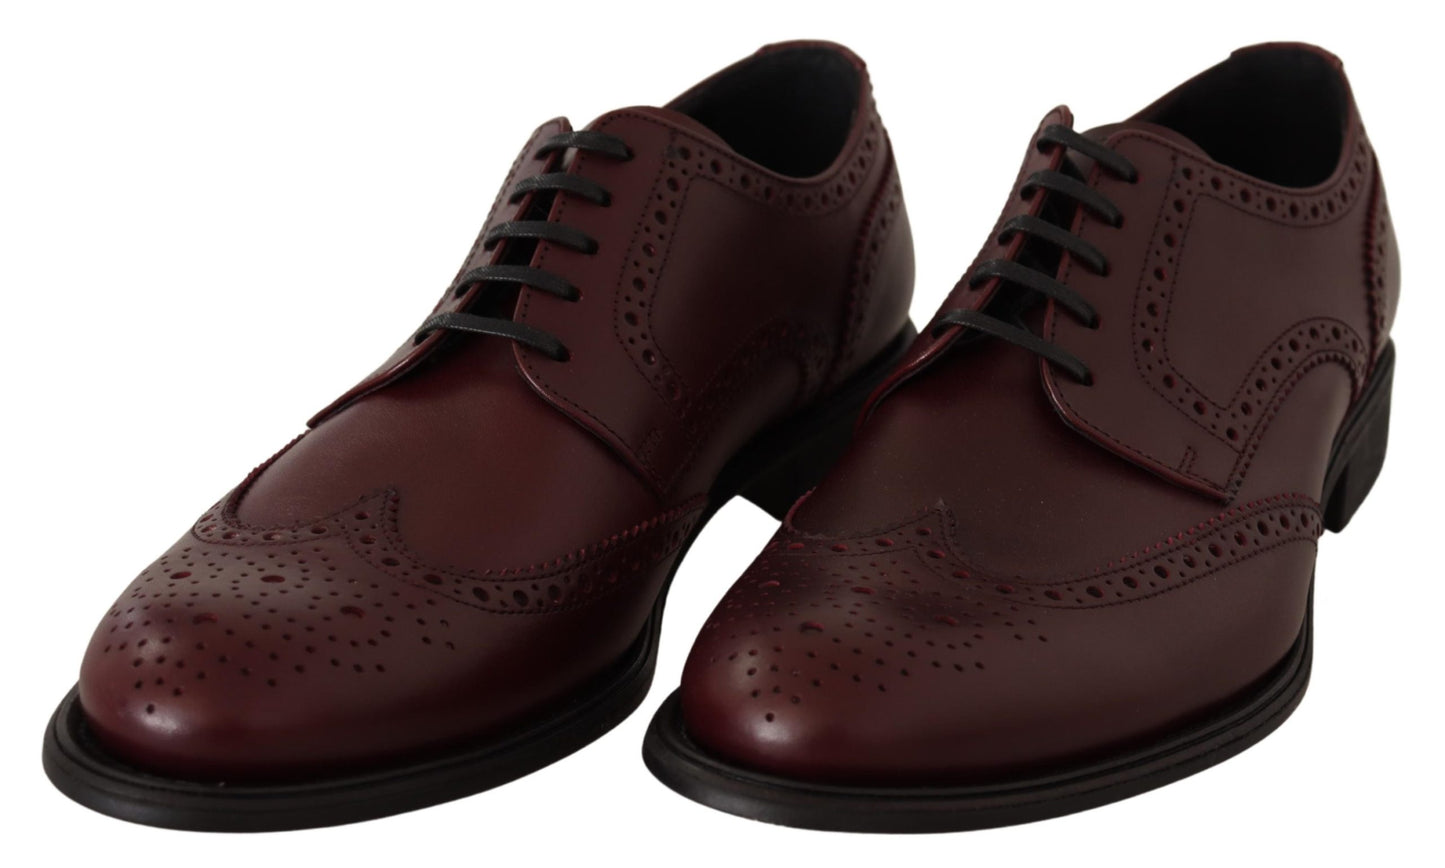 Bordeaux Leather Oxford Wingtip Formal Shoes